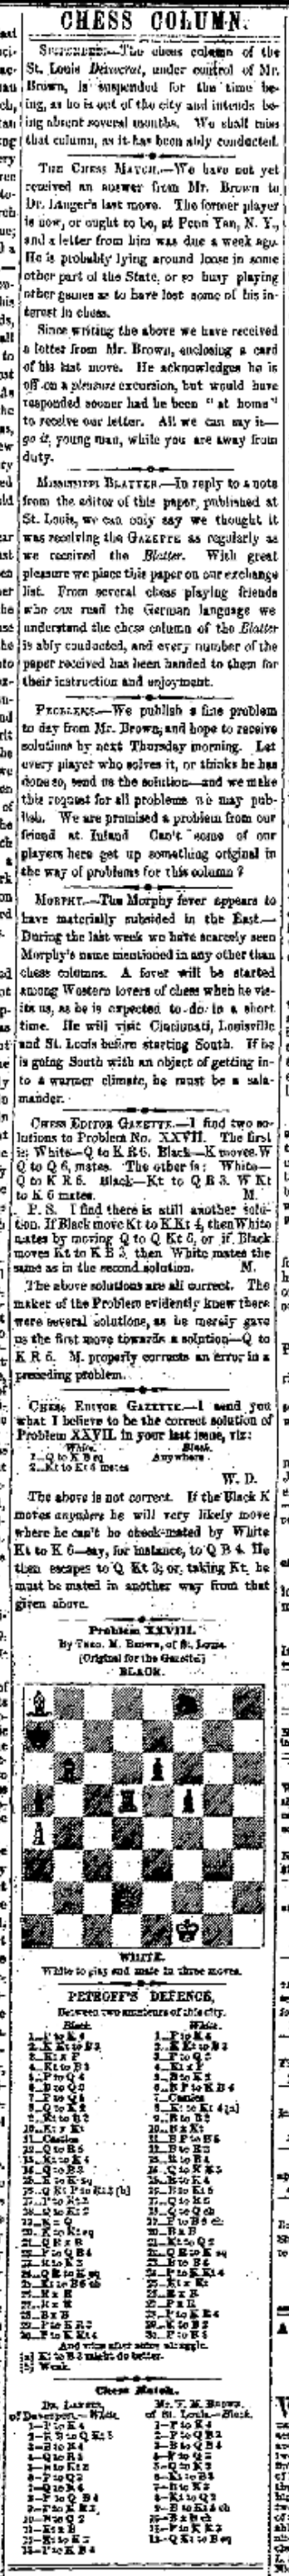 1859.07.18-01 Davenport Daily Gazette.png